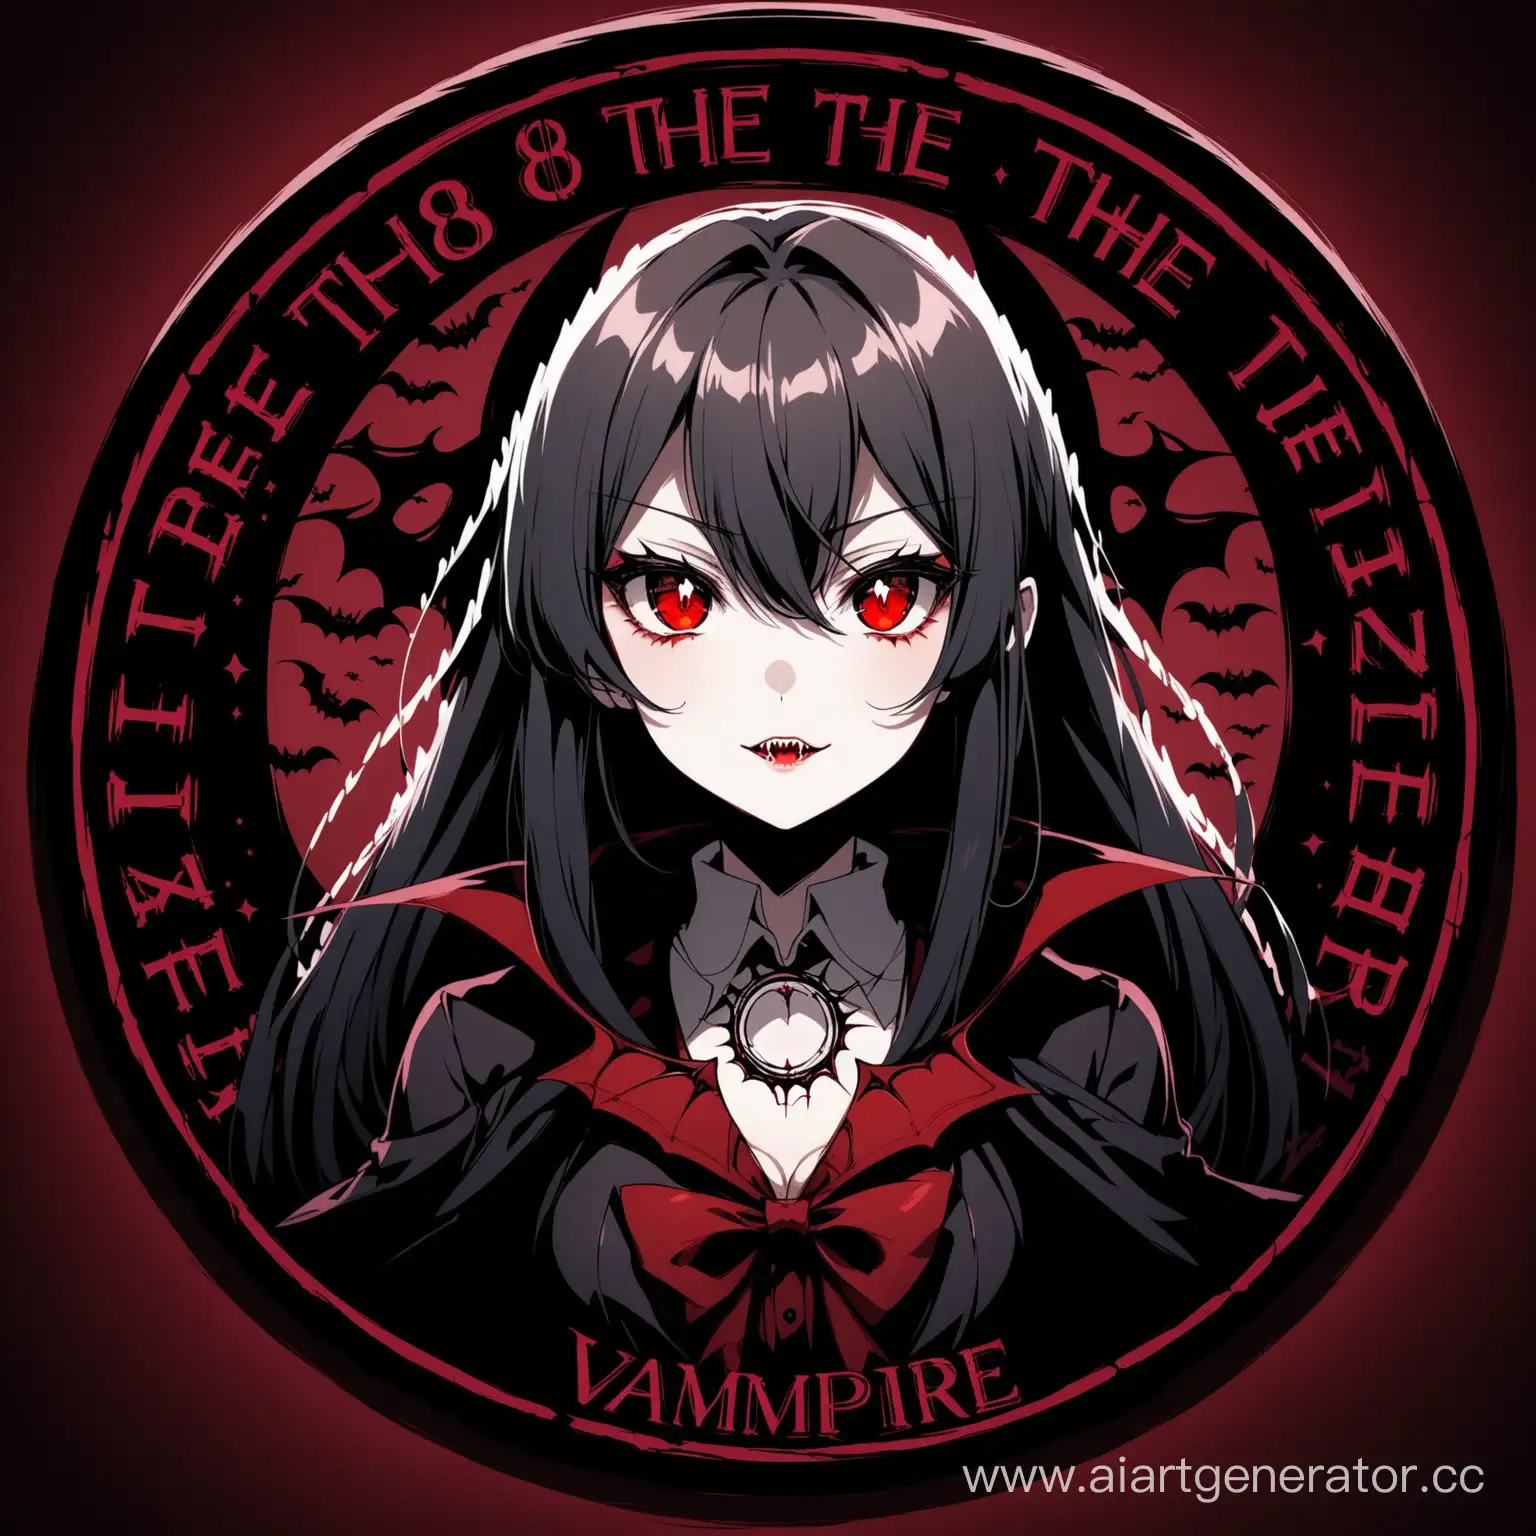 Mysterious-Anime-Vampire-Girl-with-VV83-Inscription-in-Dark-Tones